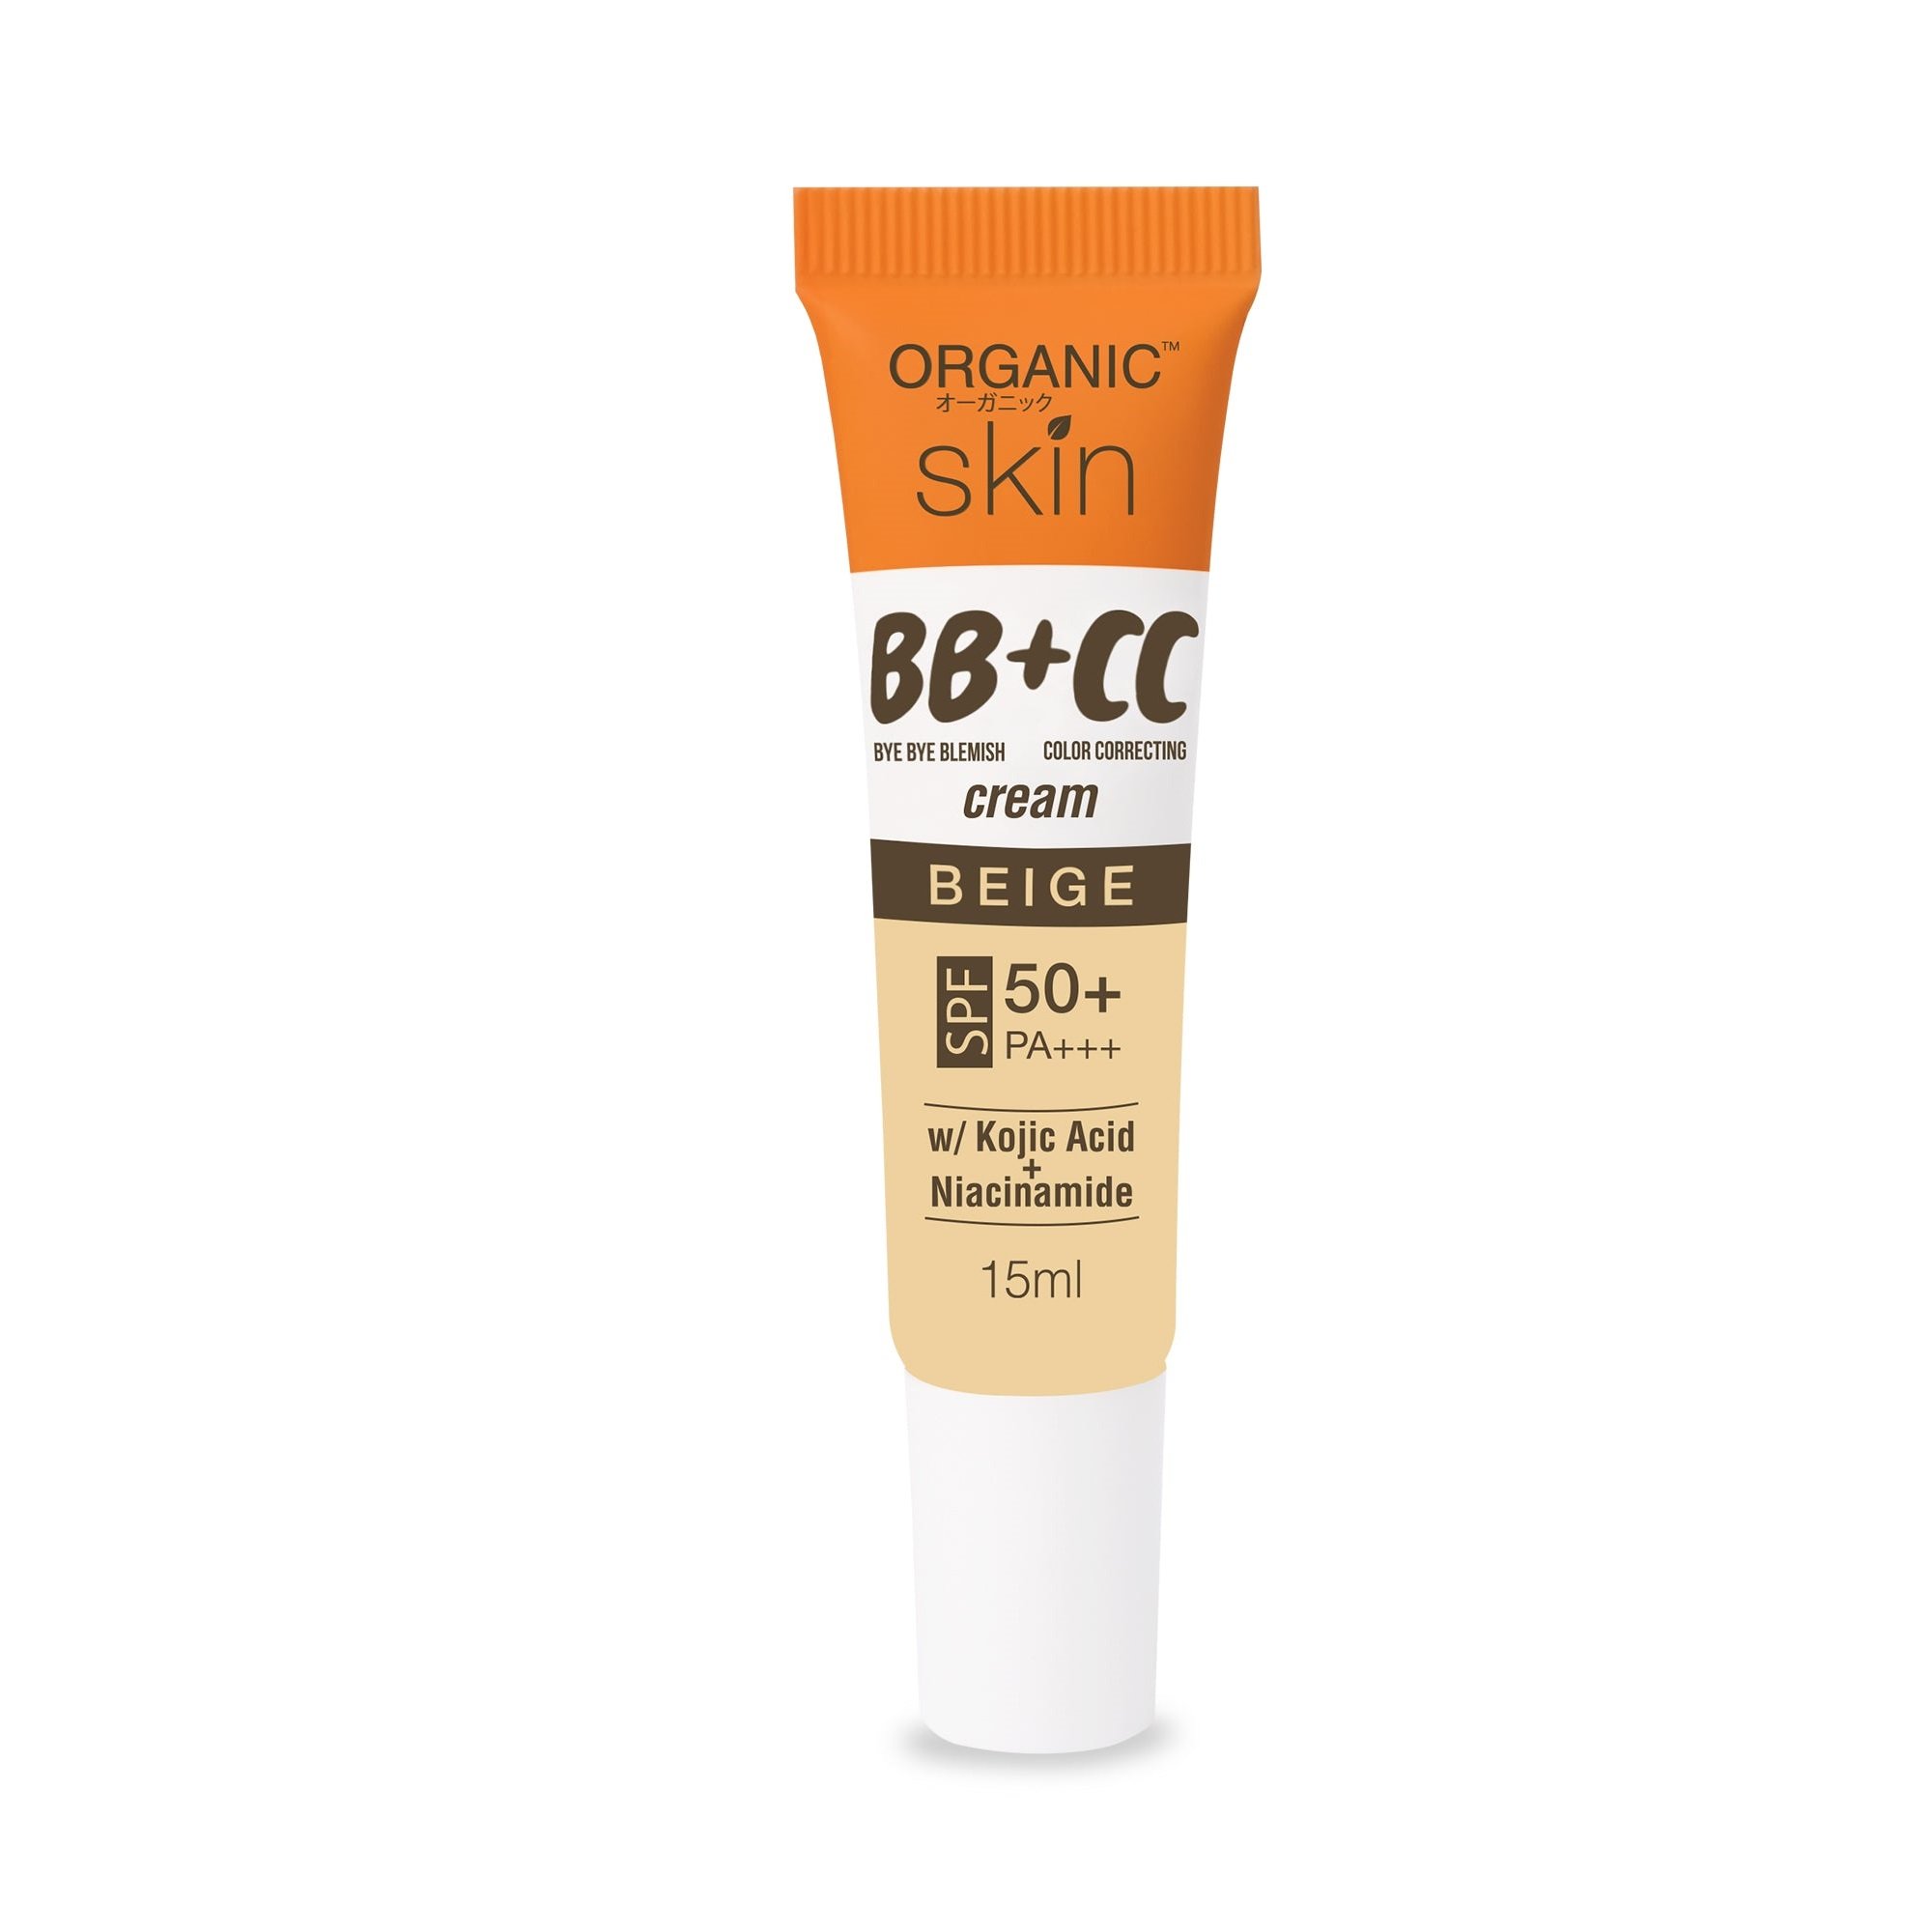 Organic Skin Japan BB + CC Whitening Cream